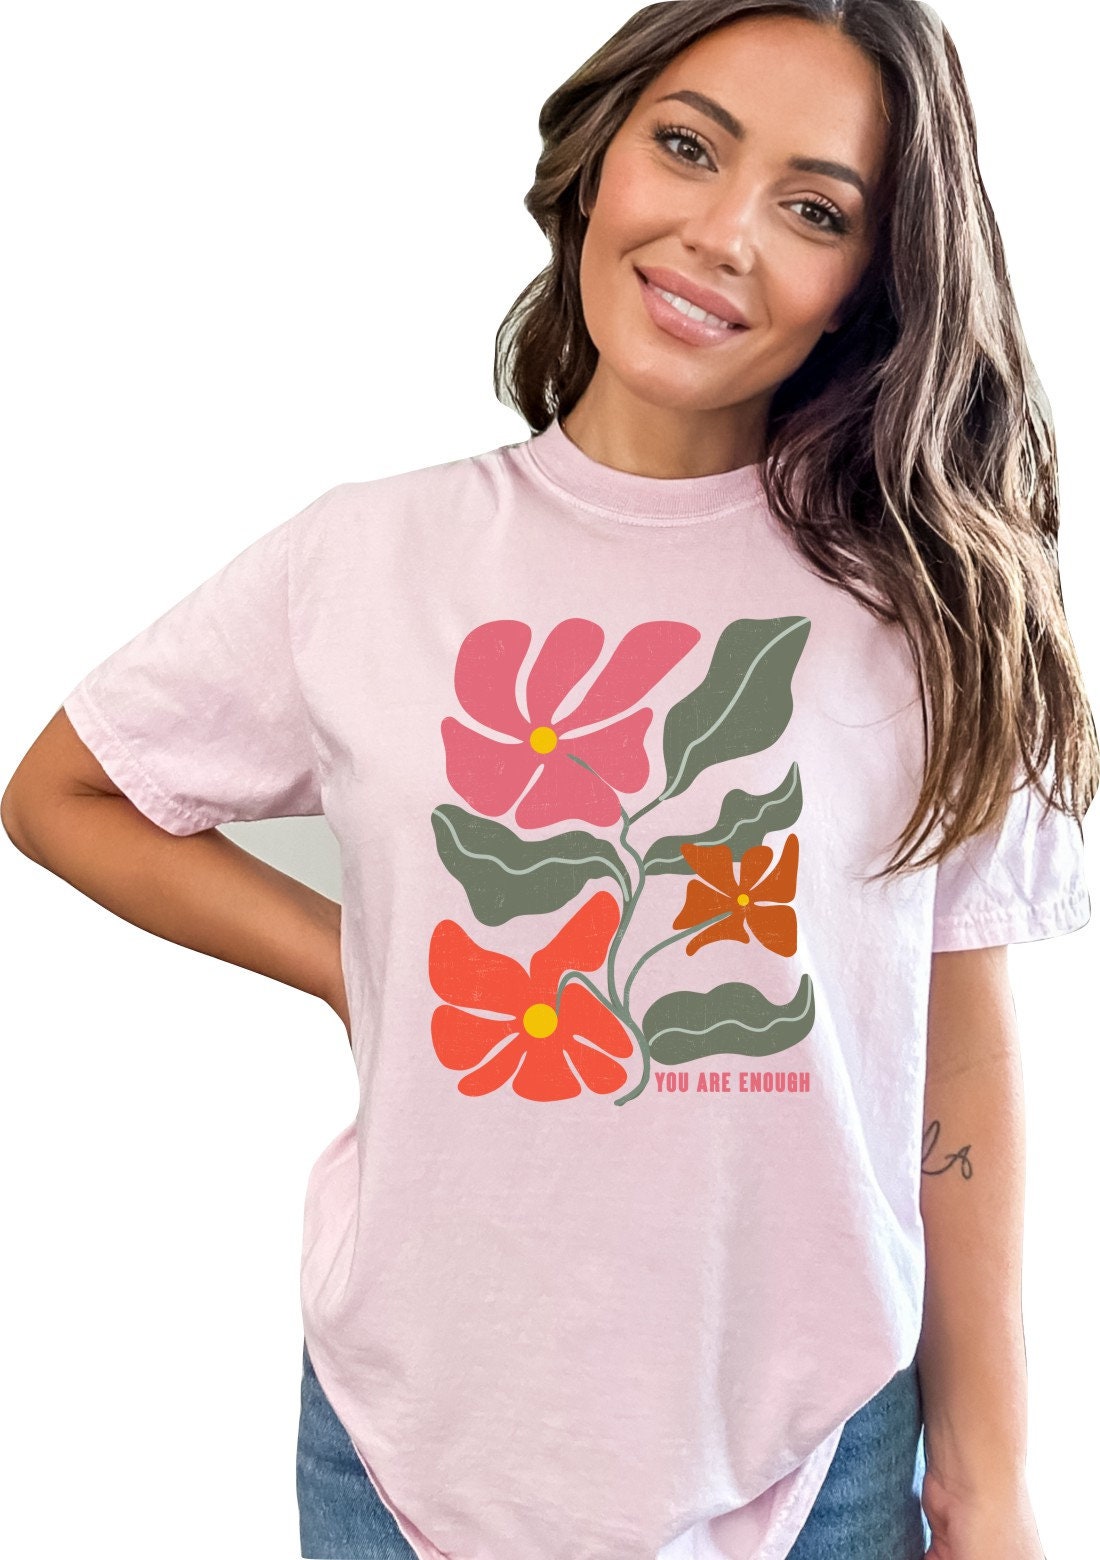 You are Enough Tshirt Flower Shirt Garden Lover Shirt Flower Lover Shirt Wild Flowers Shirt Floral Tshirt Boho Floral Shirt